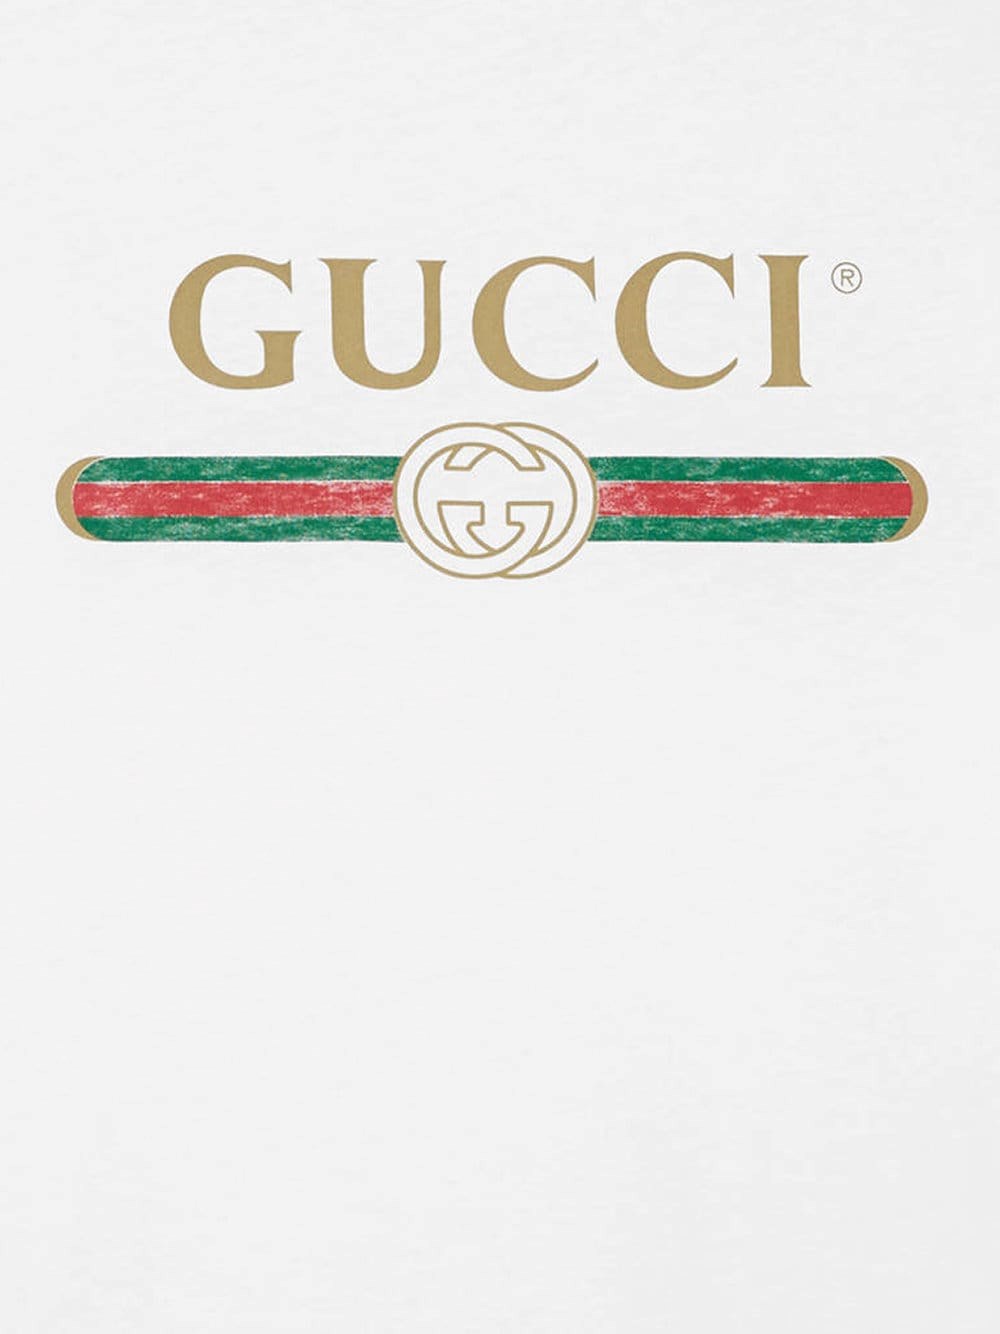 gucci shirt with logo